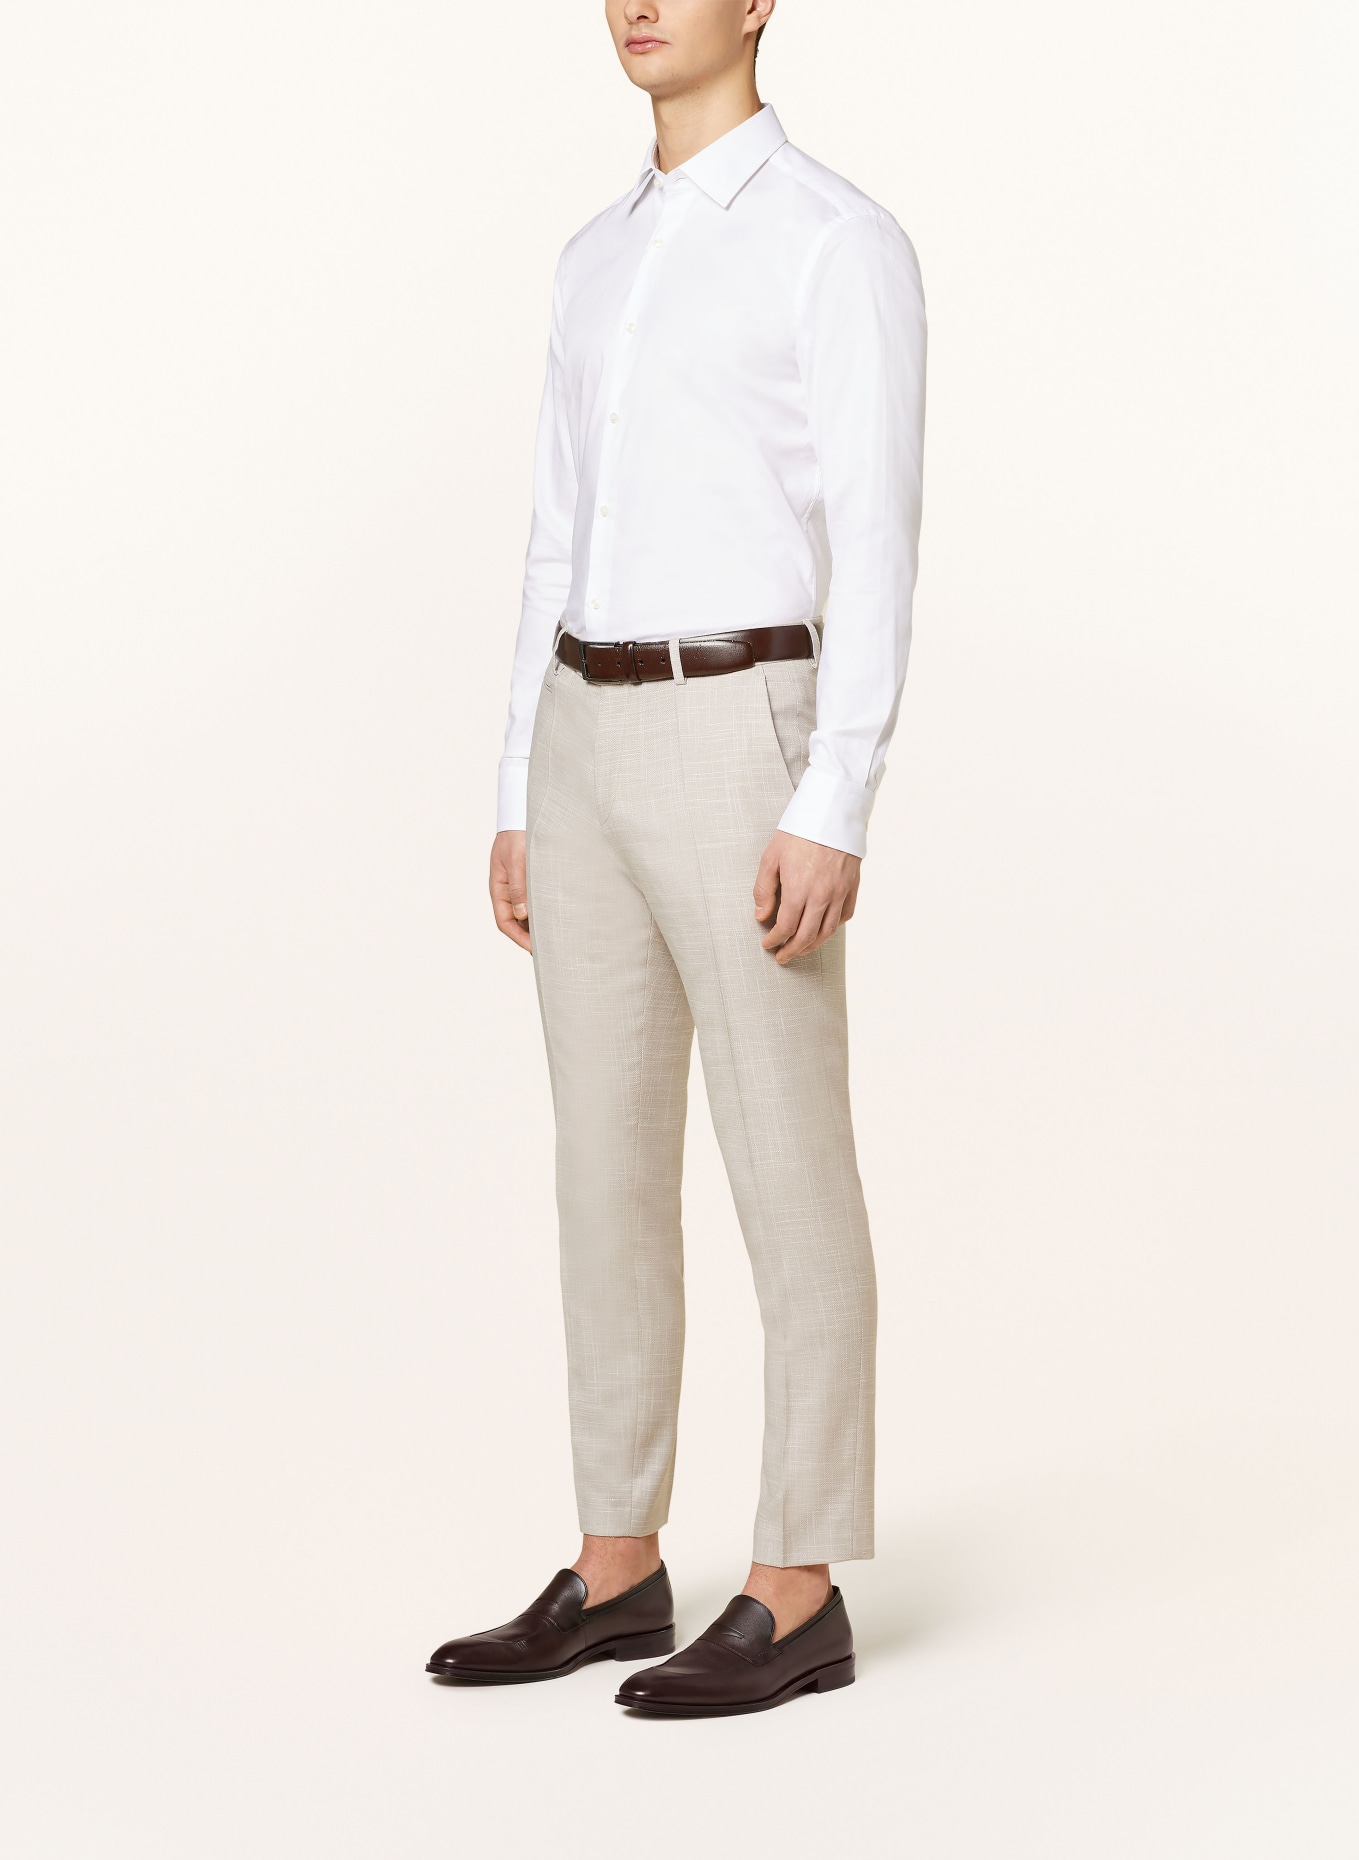 Hugo boss Trousers Slim Fit Stretch Cotton Black Kaito1 50410310 | eBay